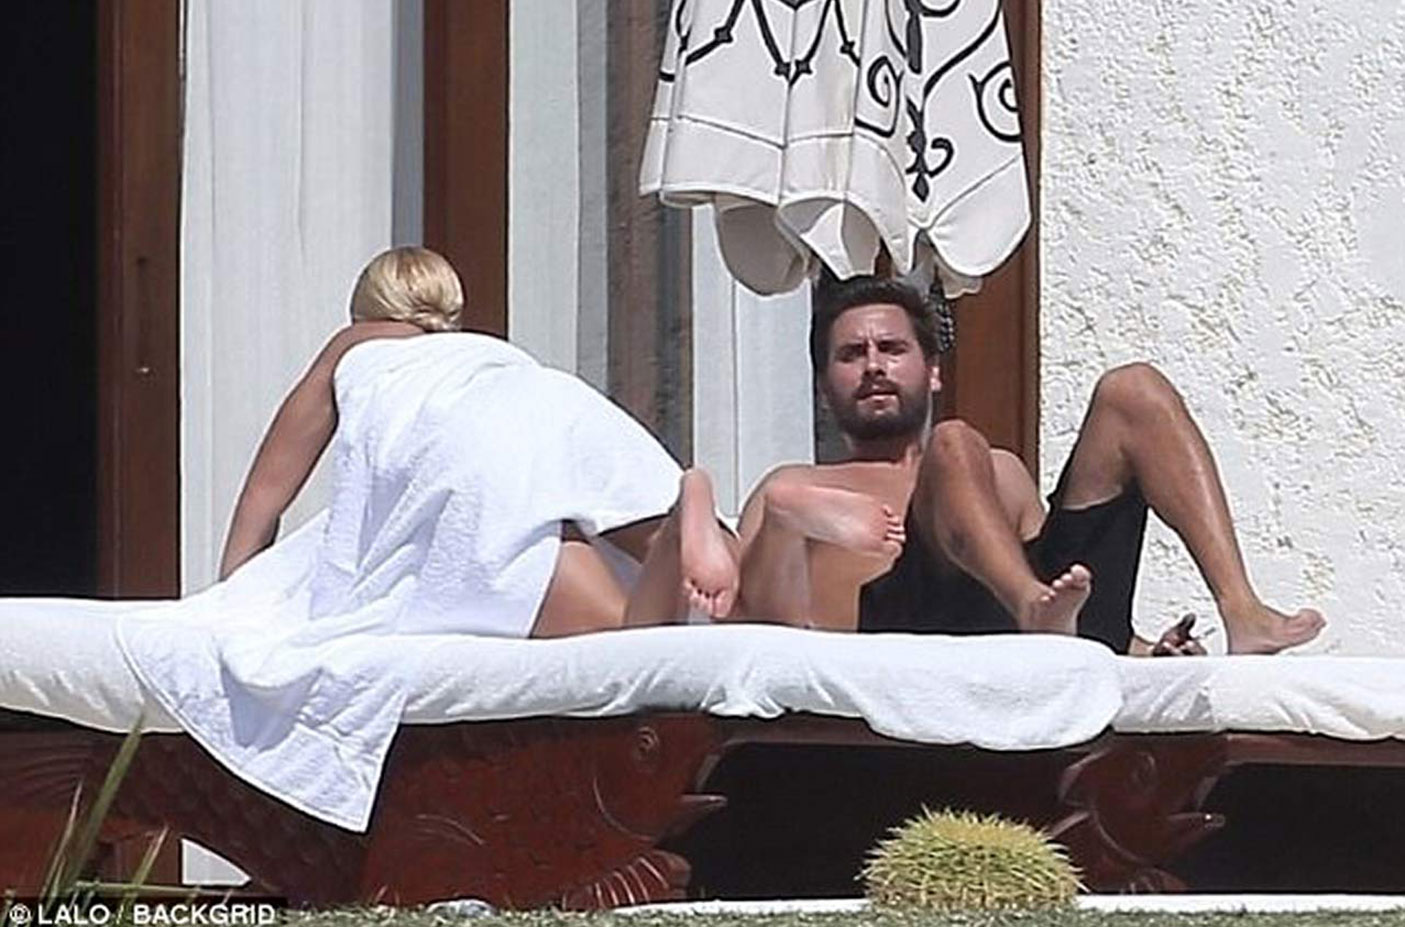 Sofia Richie Nude Sunbathing with Scott Disick.